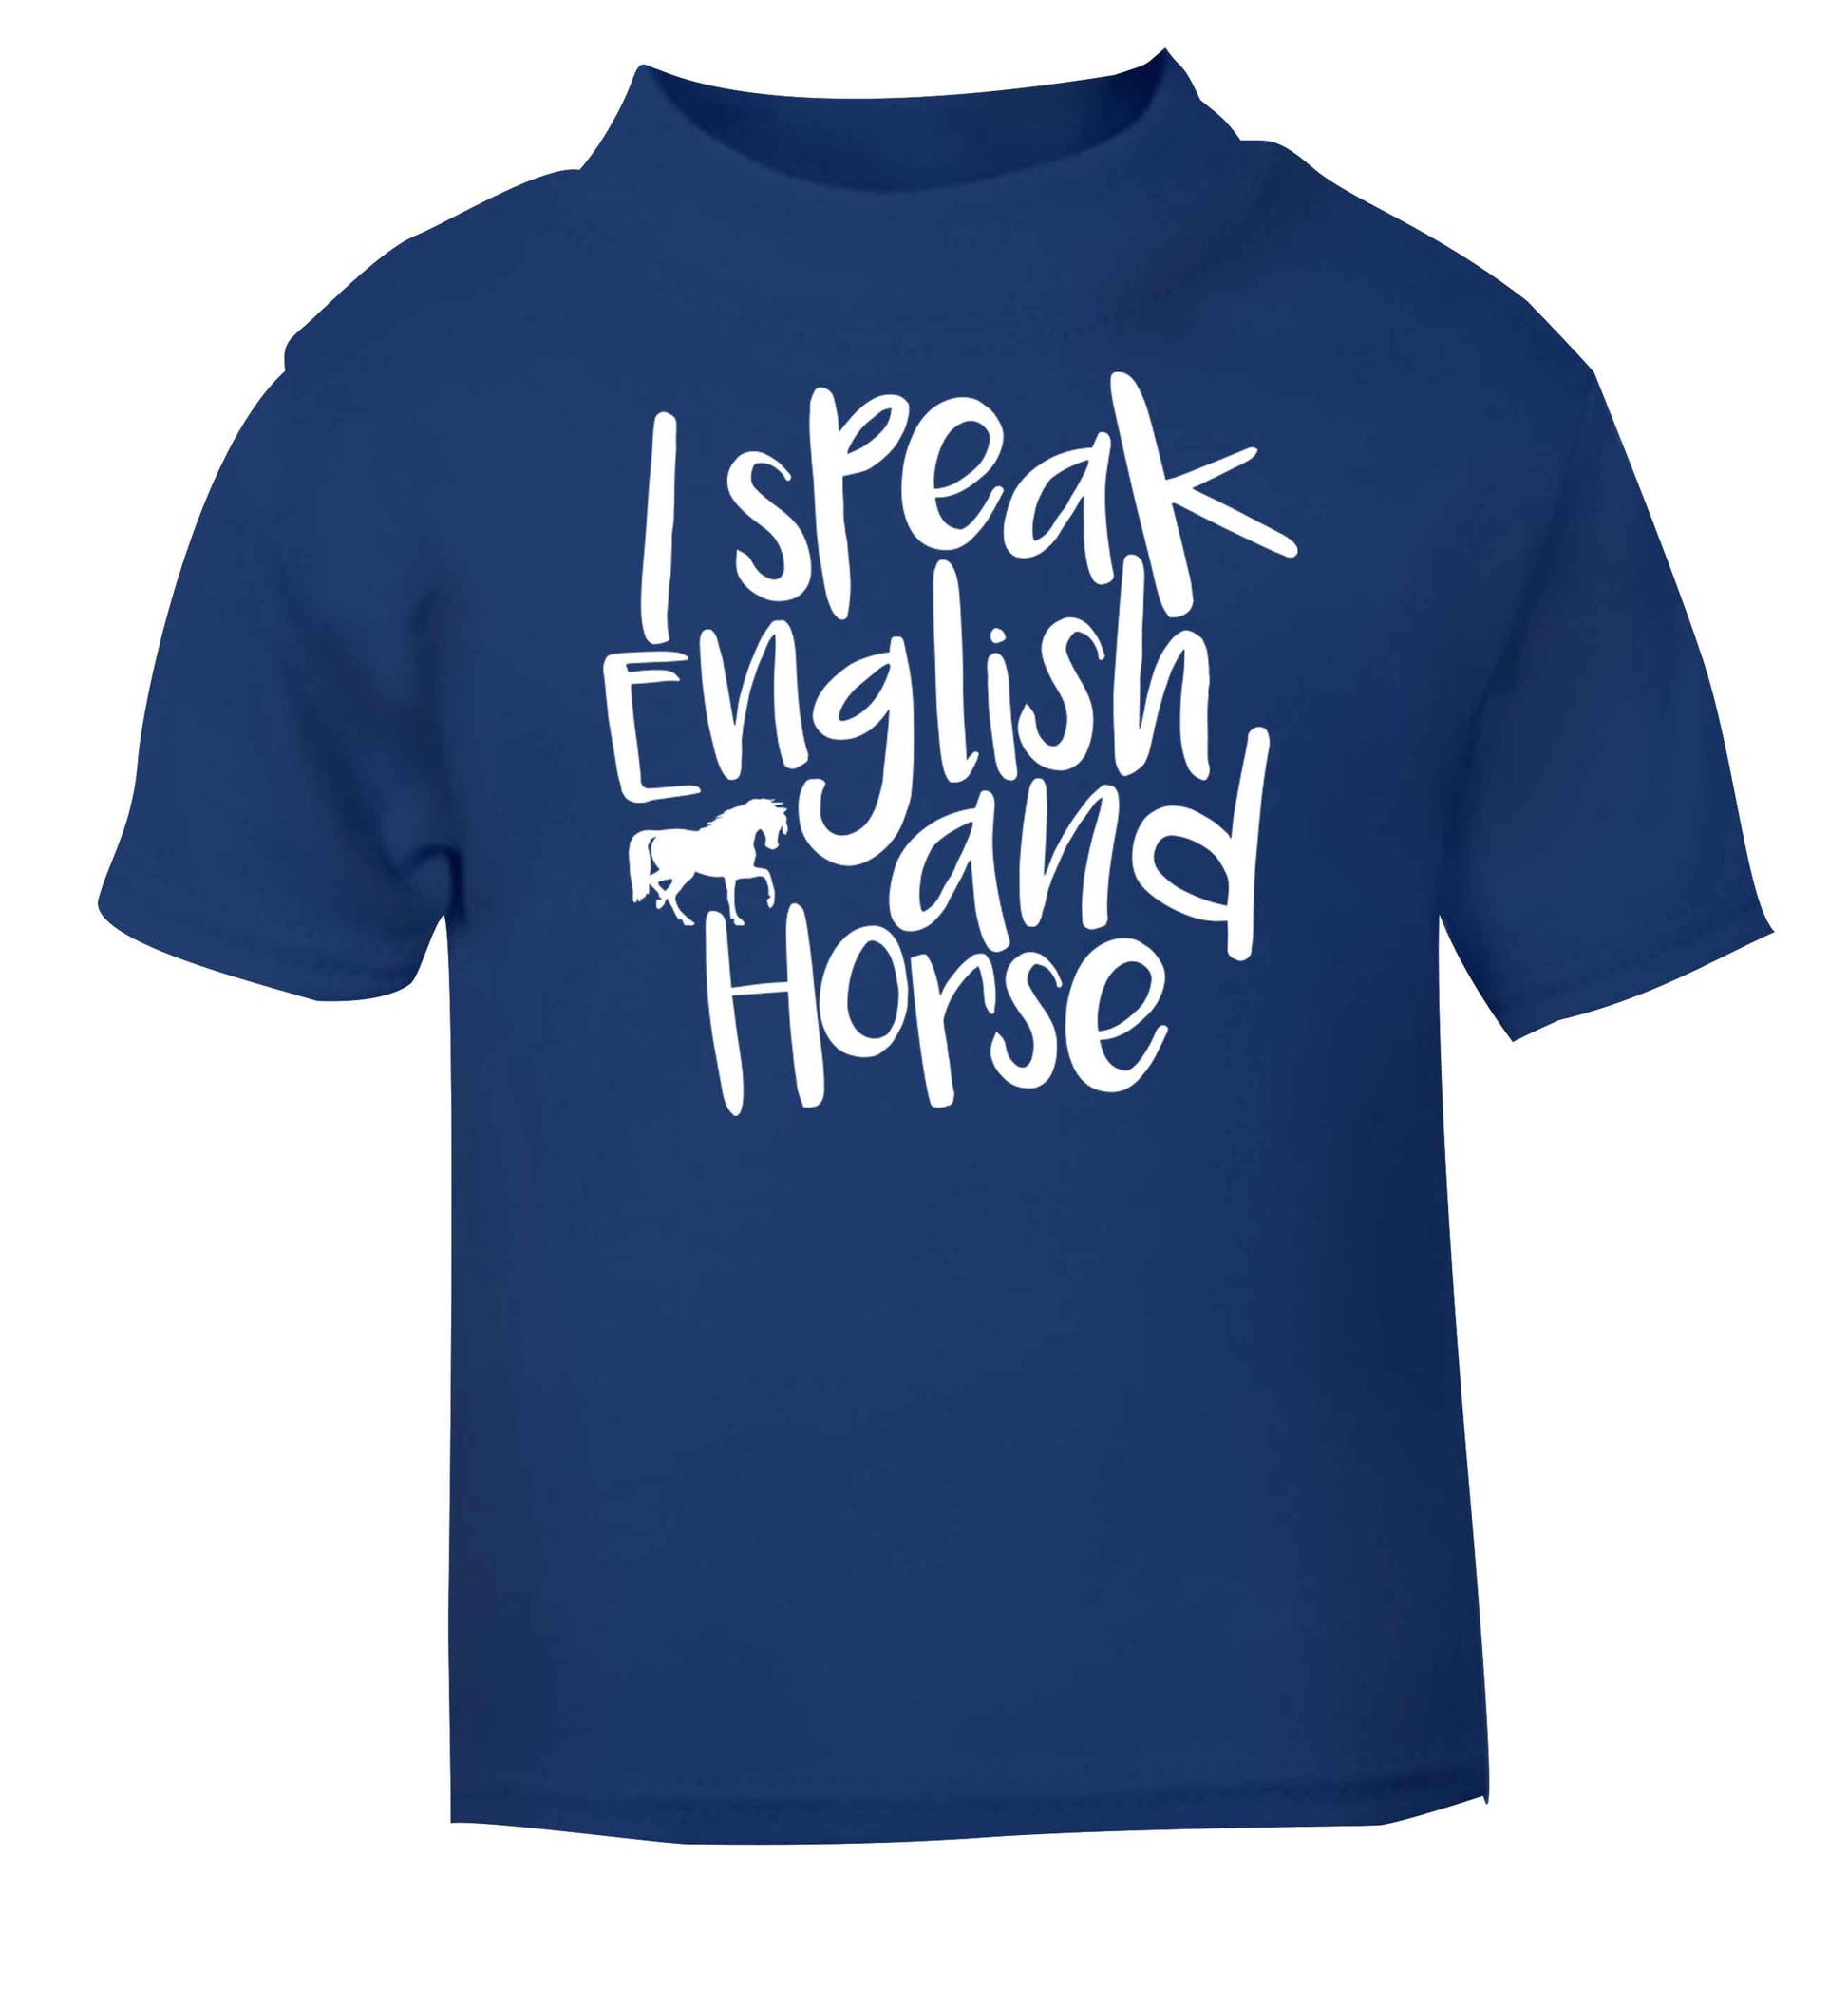 I speak English and horse blue baby toddler Tshirt 2 Years